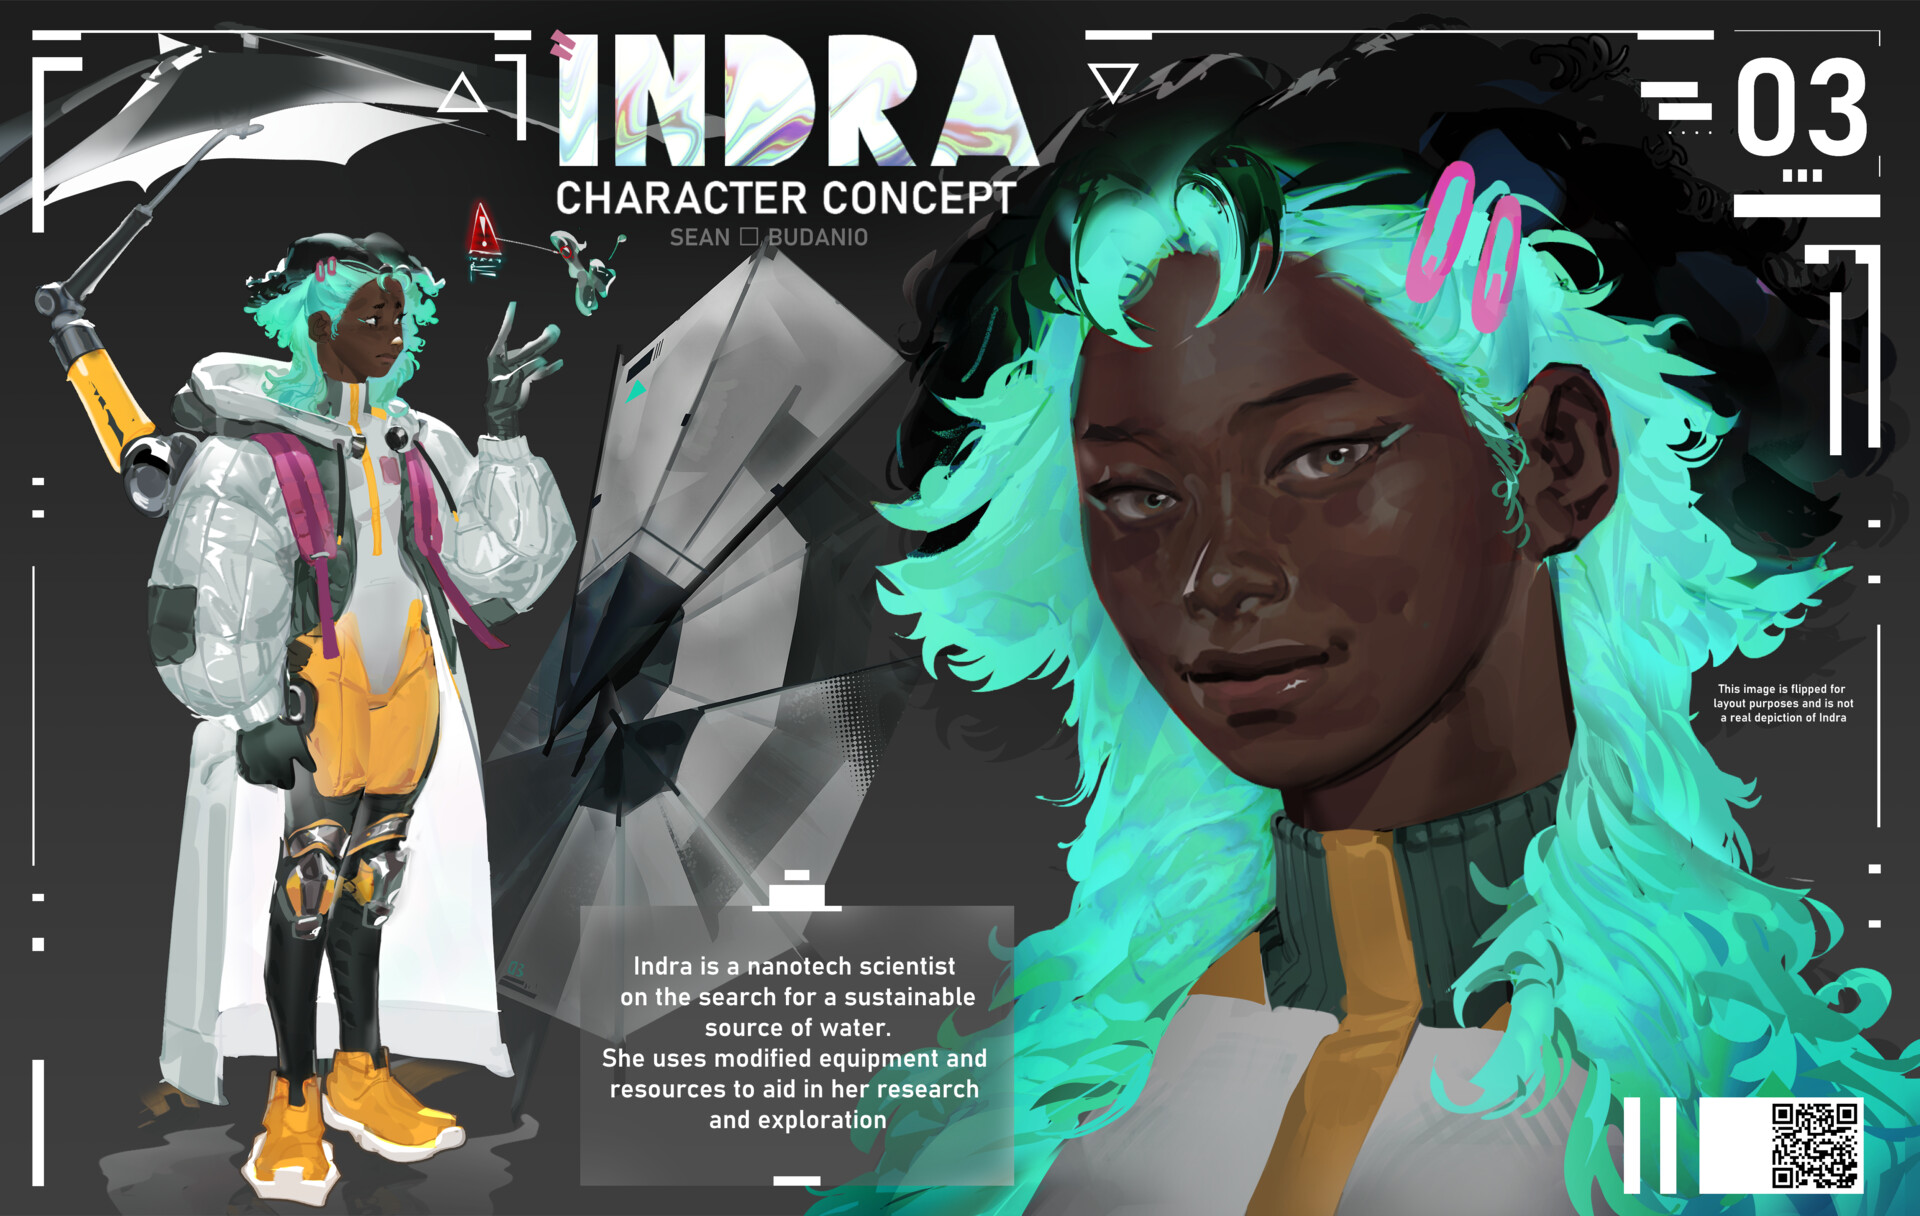 Indra-chan - Hobbyist, General Artist